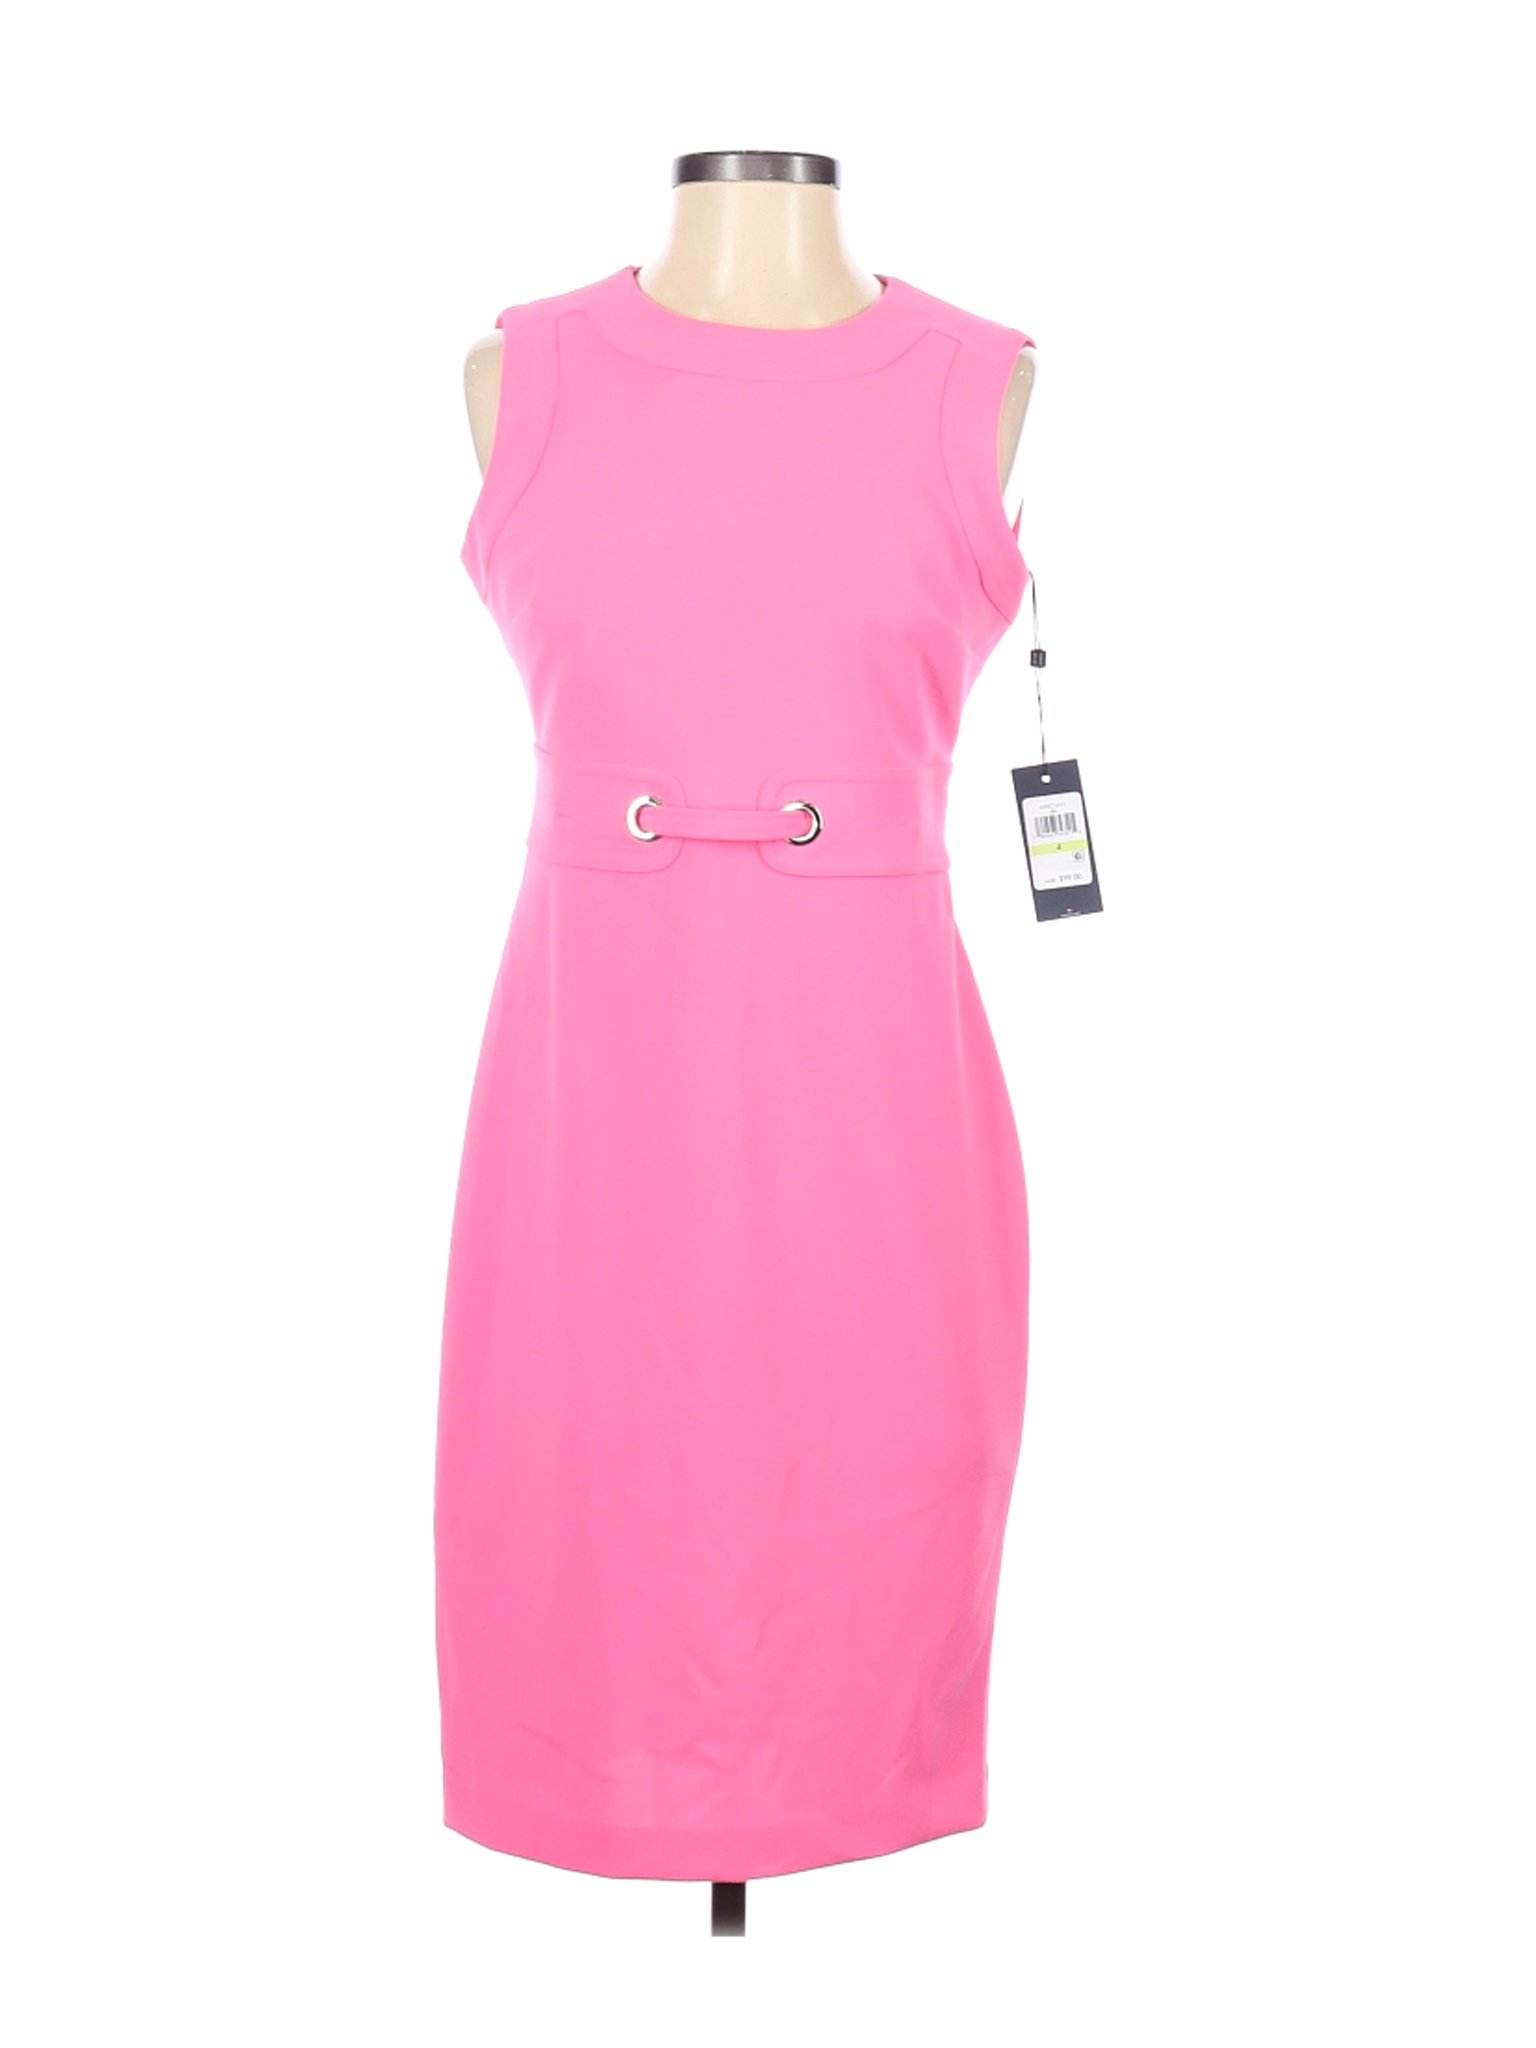 NWT Tommy Hilfiger Women Pink Casual Dress 4 | eBay